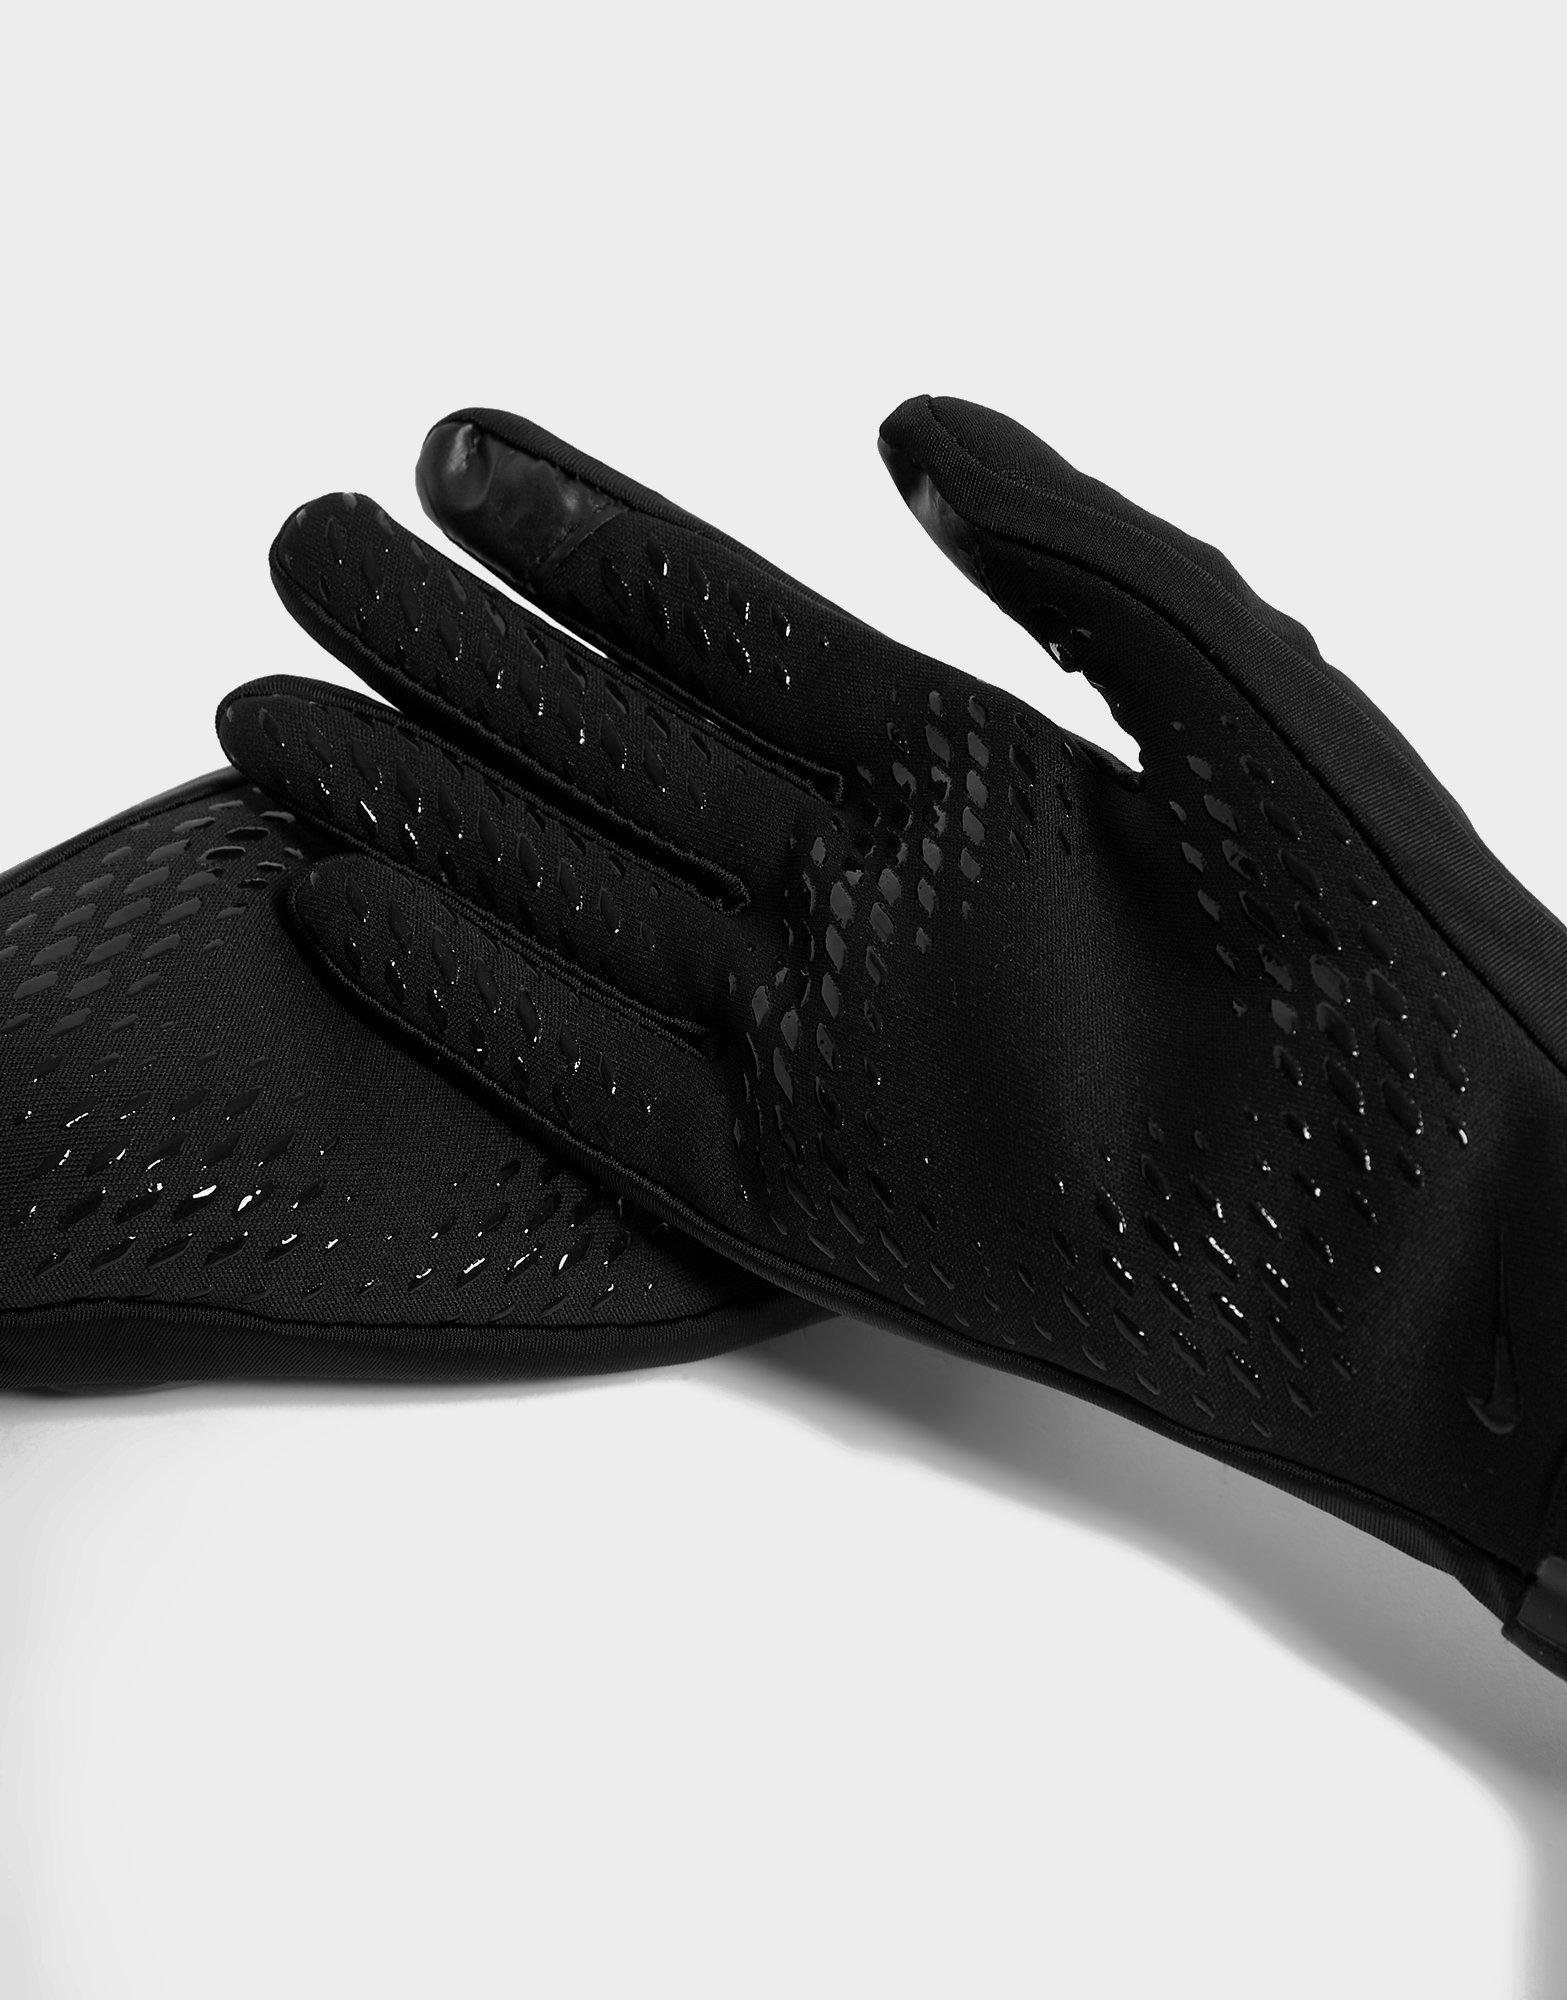 academy hyperwarm gloves